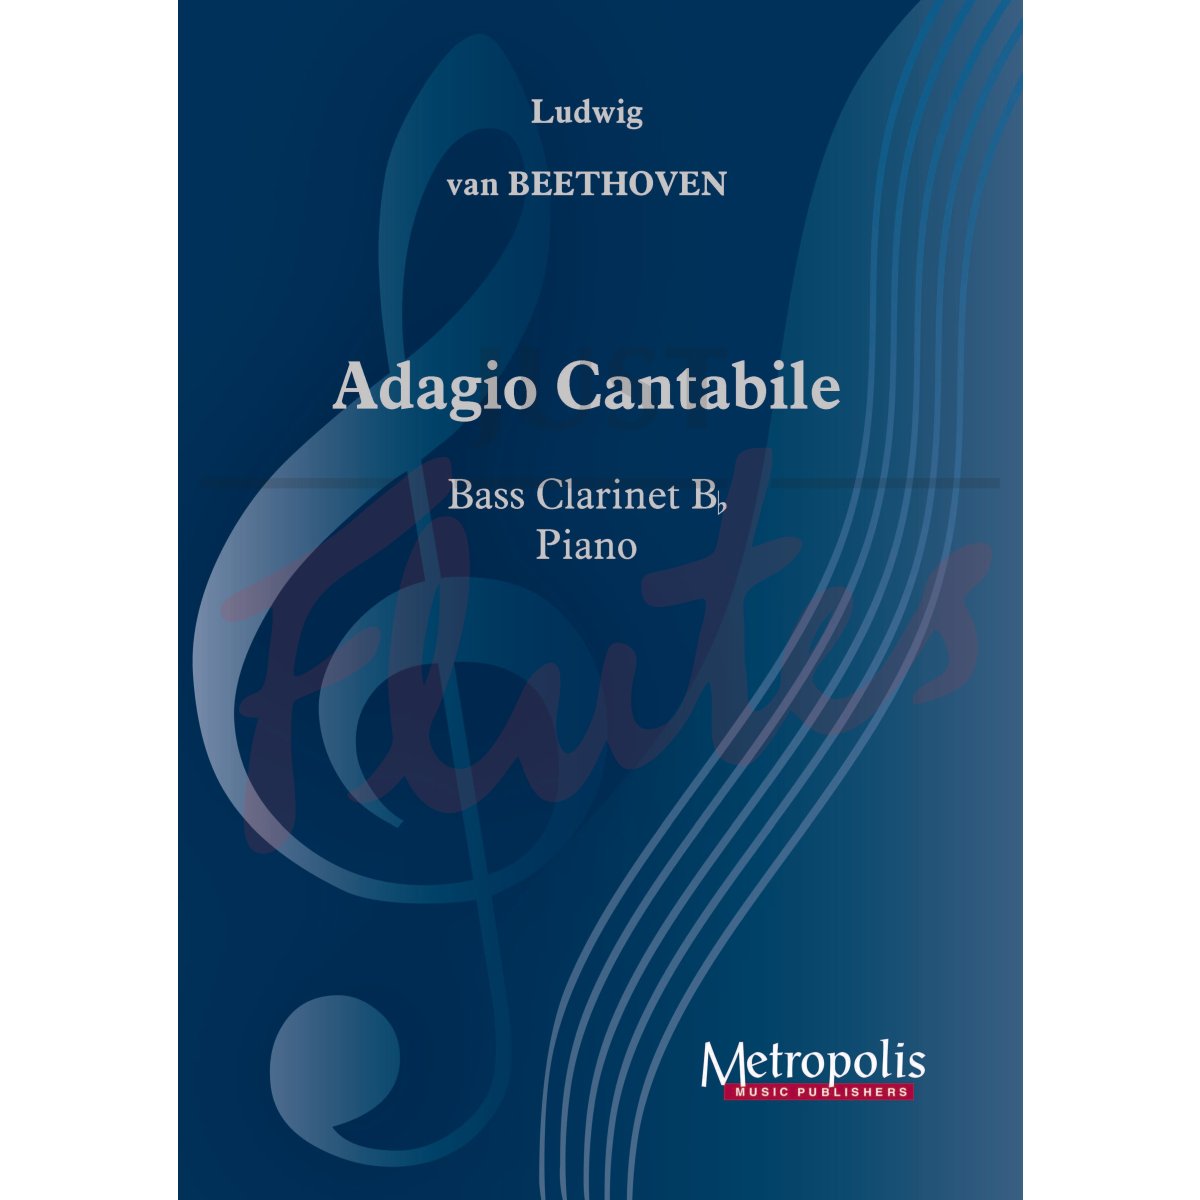 Adagio Cantabile for Bass Clarinet and Piano